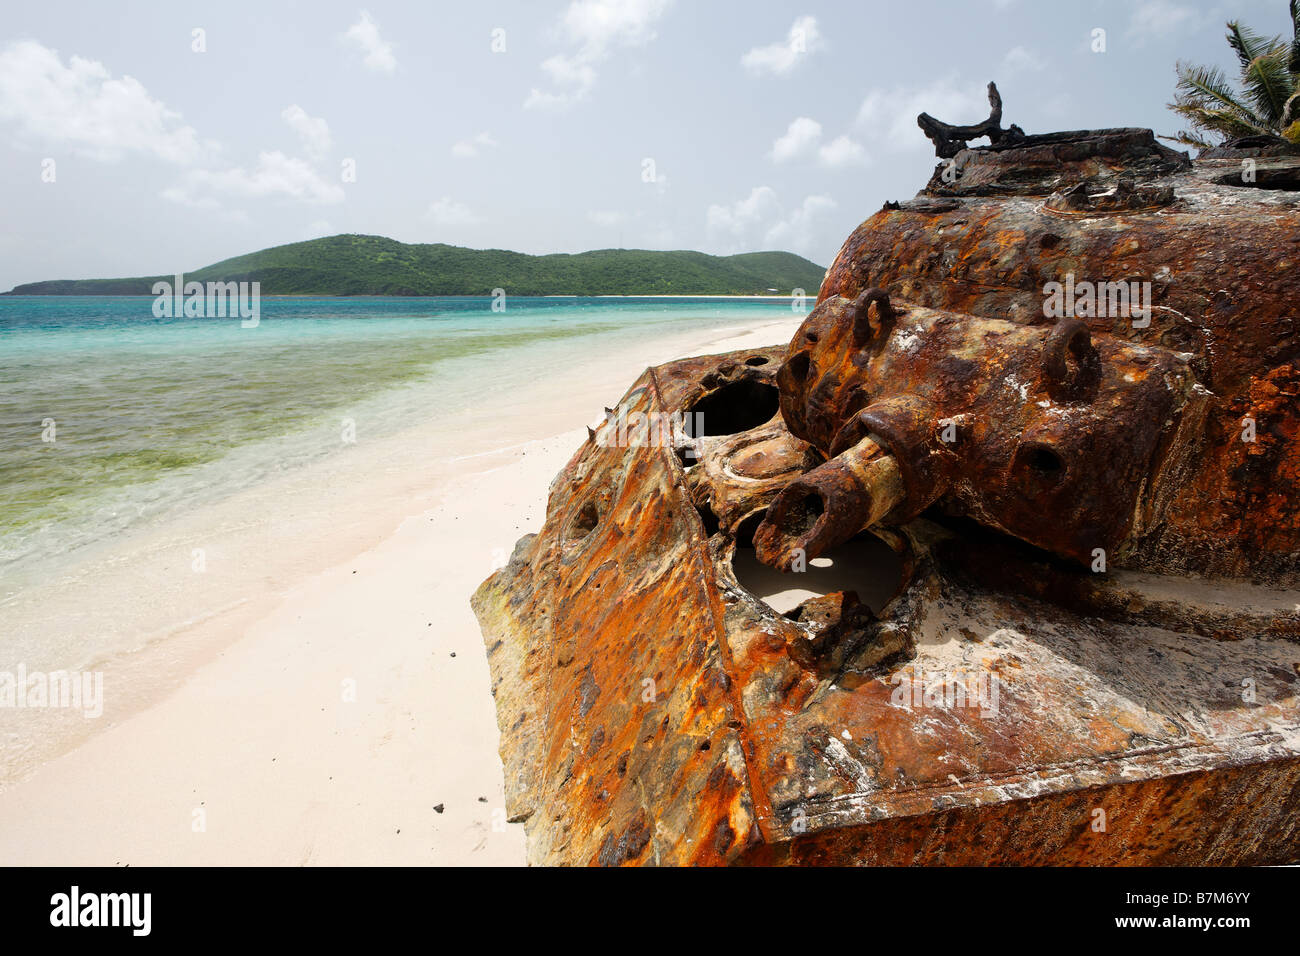 Close Up View of a Destroyed Sherman Tank on a Tropical Beach Flamenco Beach Culebra Puerto Rico Stock Photo